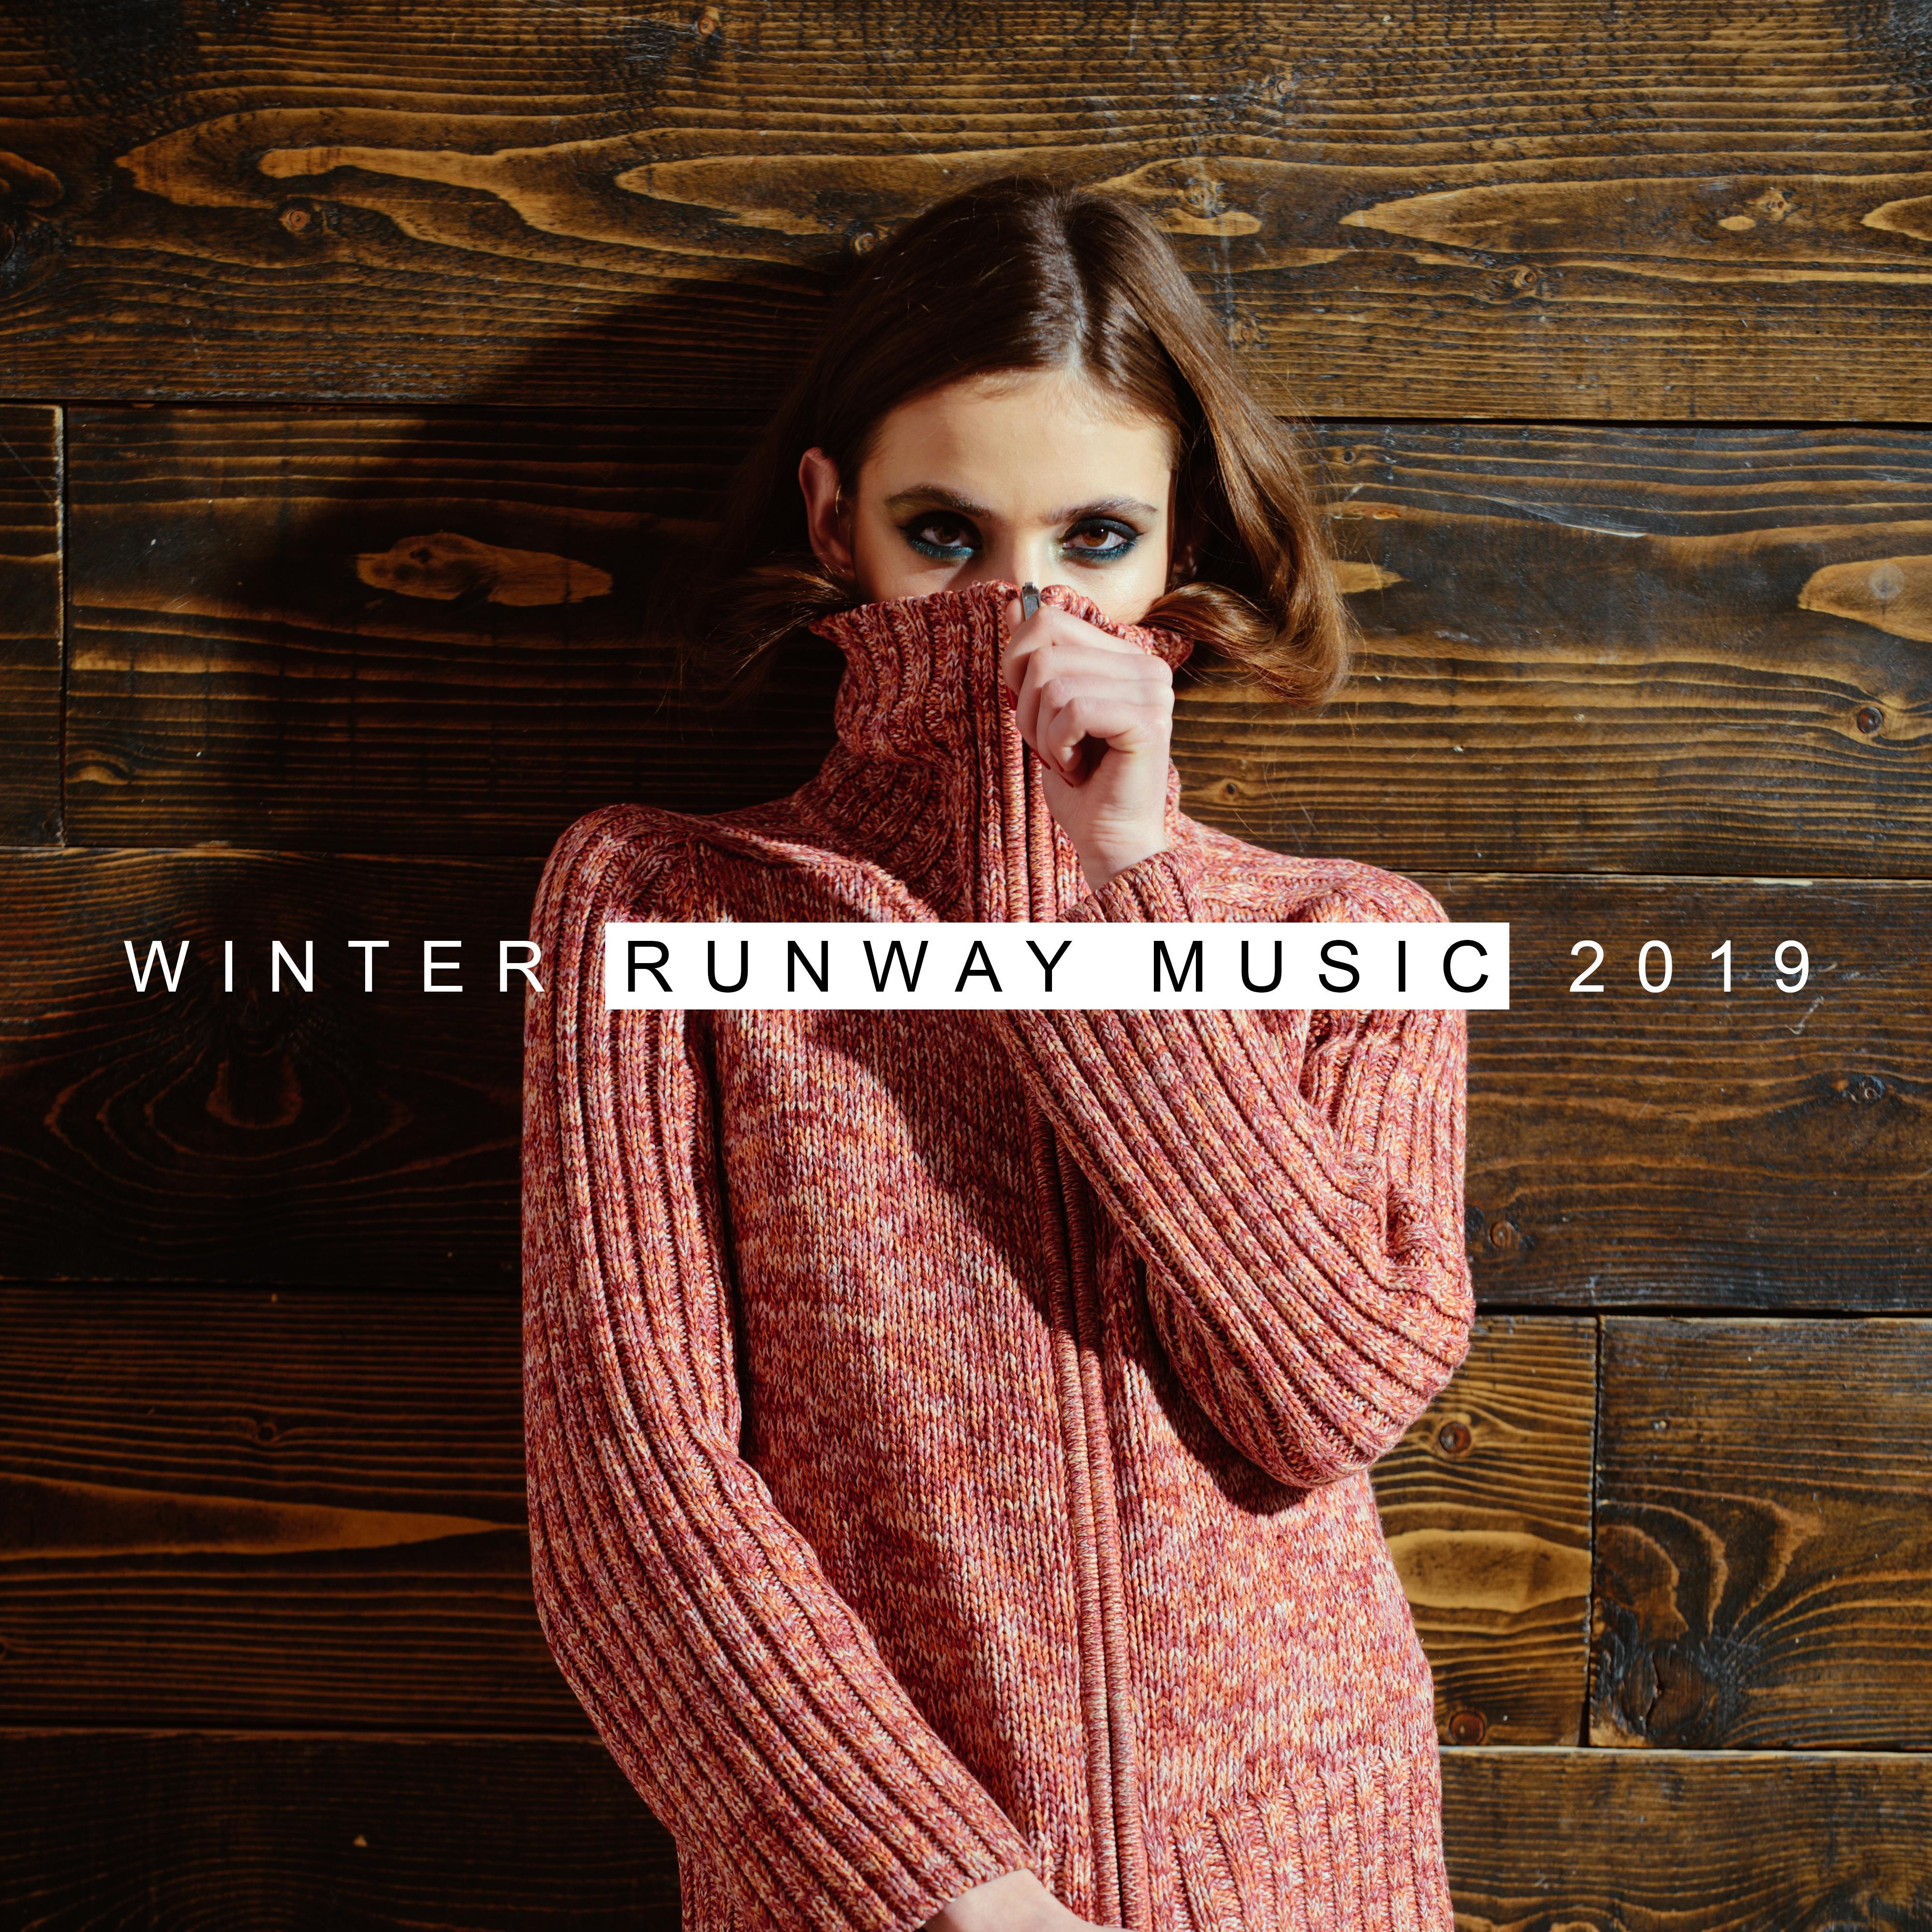 Winter Runway Music 2019: Catwalk Music, Fashion Week 2019